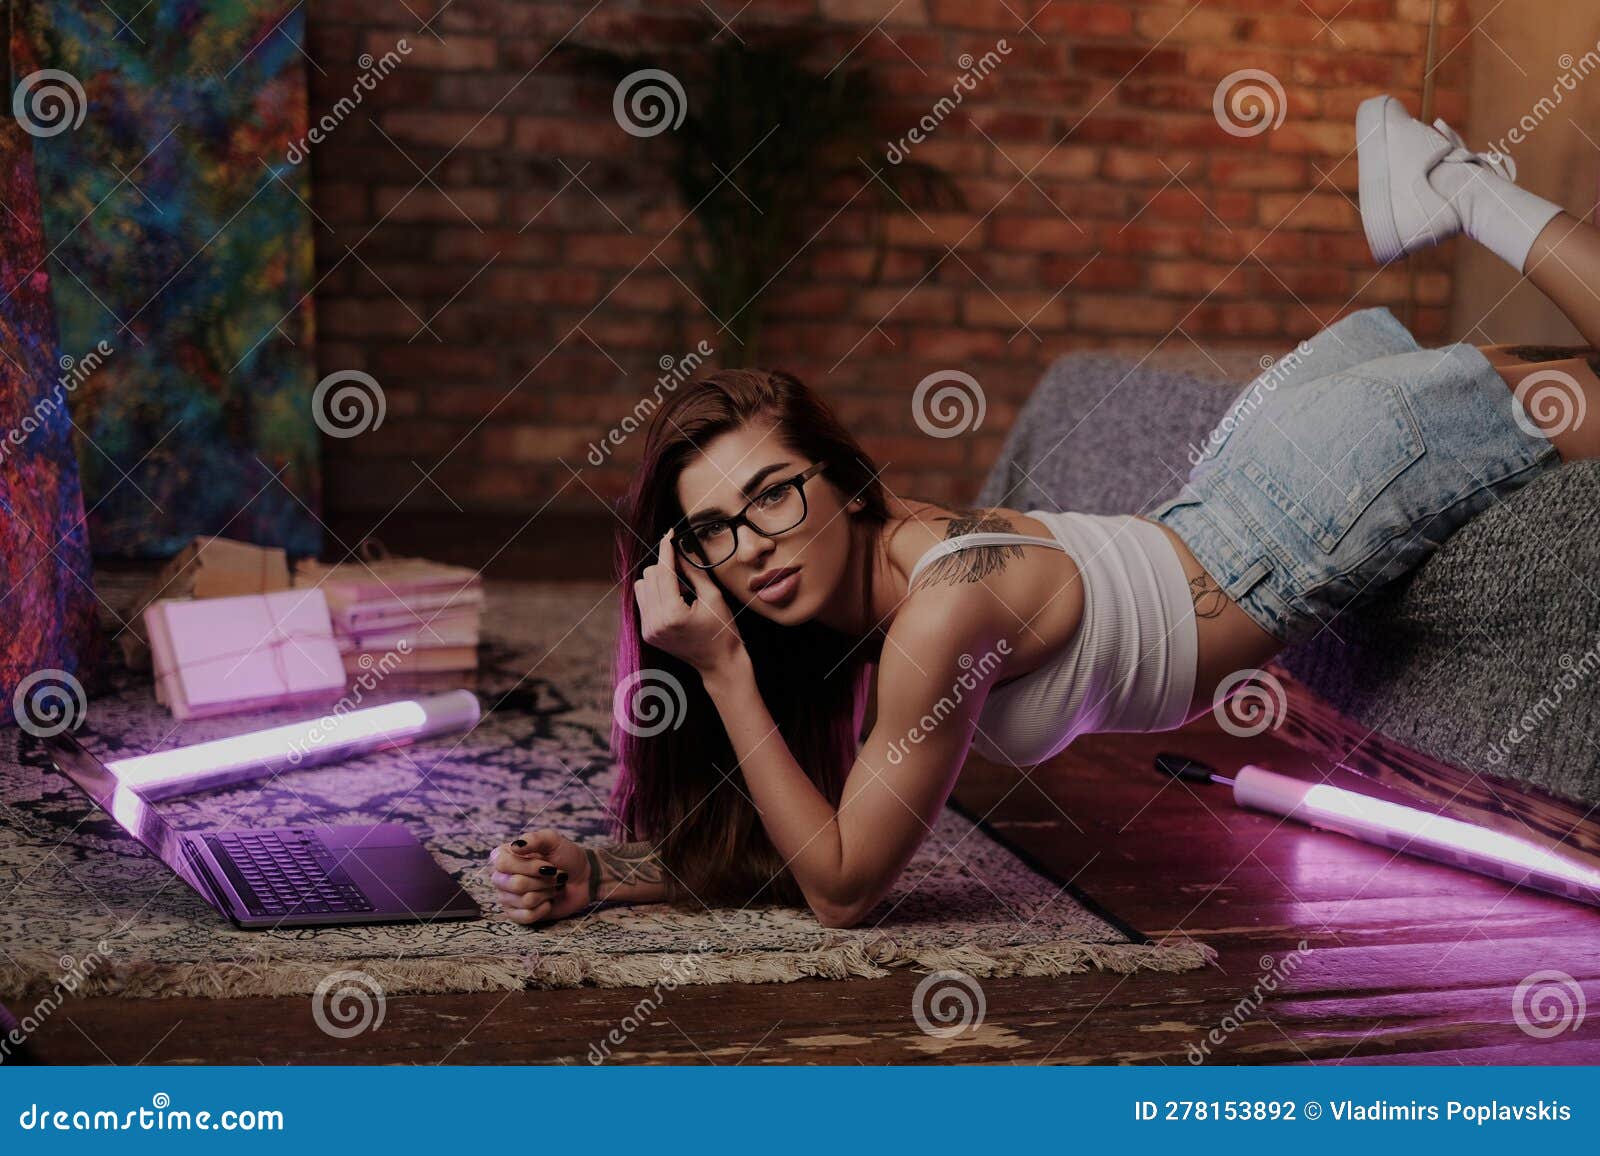 Seductive Girl Tattooed Body And Glasses Using Laptop On Sofa Stock